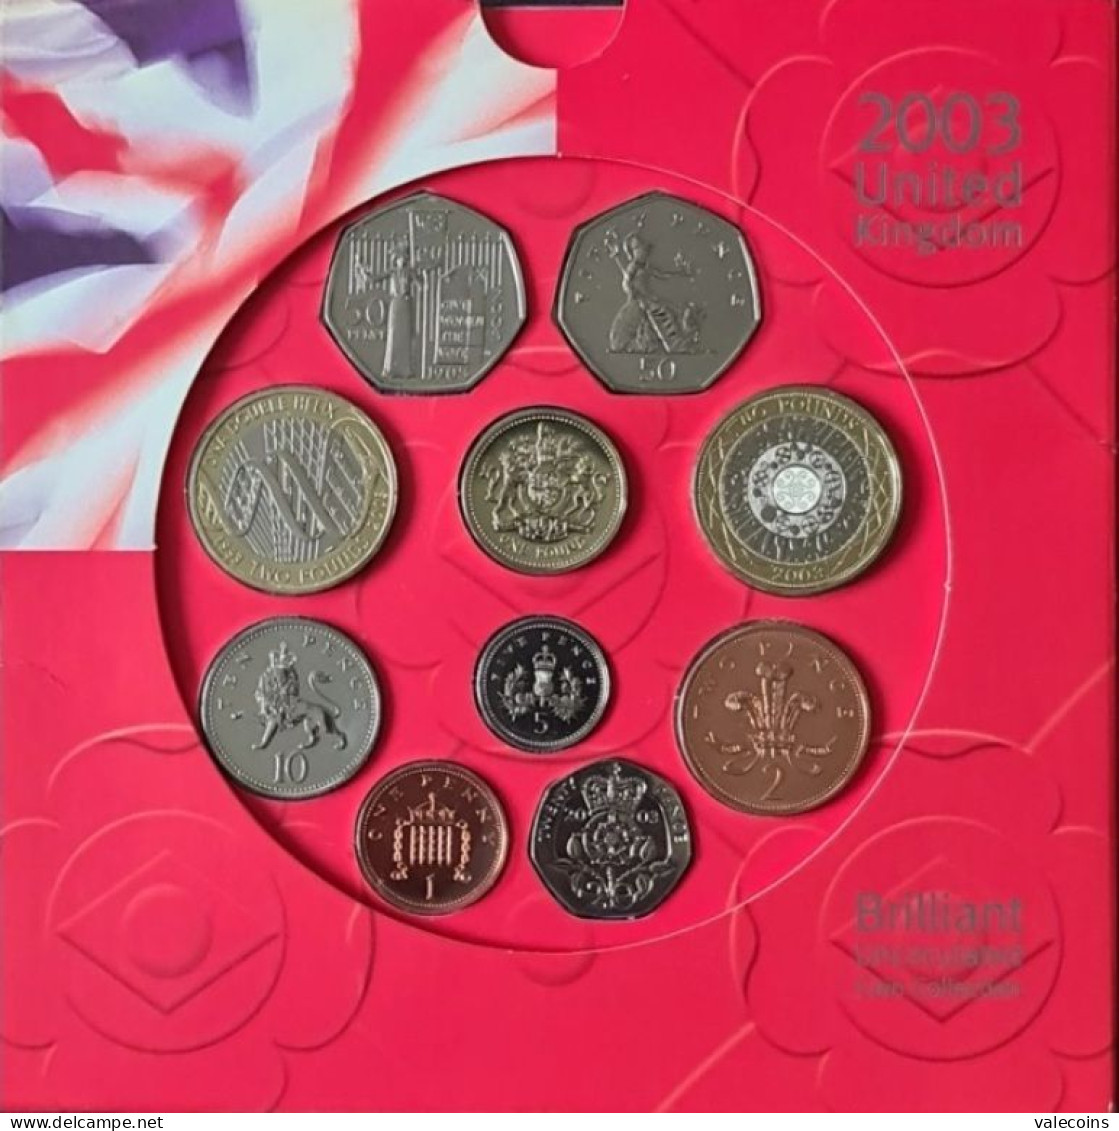 UK UNITED KINGDOM GREAT BRITAIN  2003 - 10 Brilliant UNC Coins - Official Folder - Mint Sets & Proof Sets